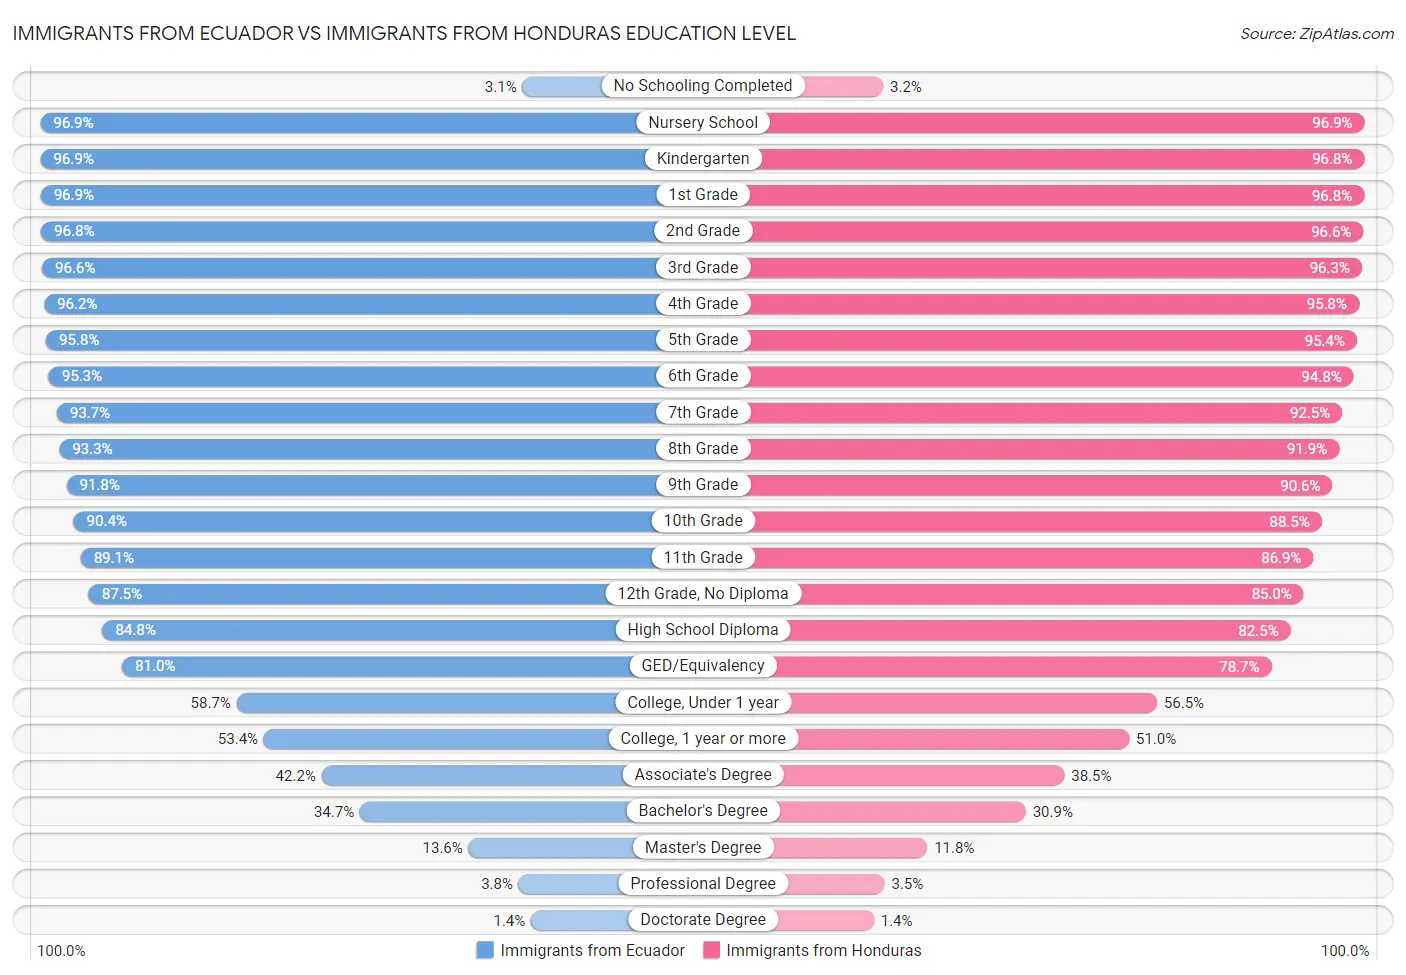 Immigrants from Ecuador vs Immigrants from Honduras Education Level